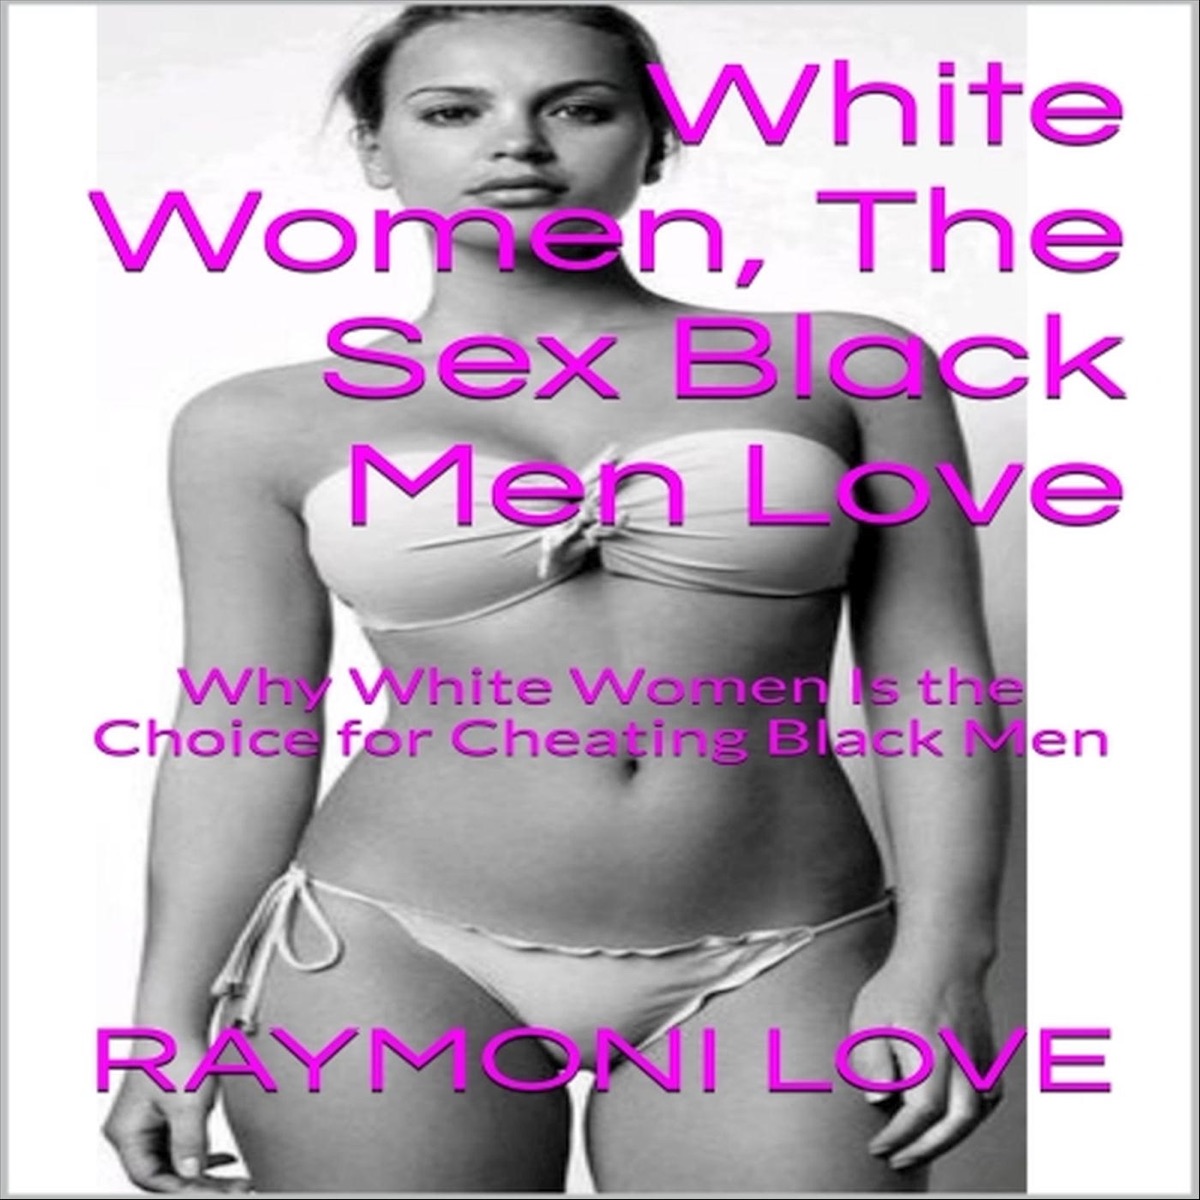 White Women, The Sex Black Men Love (Why White Women Is the Choice for Cheating Black Men) - EP - Album by Raymoni Love pic